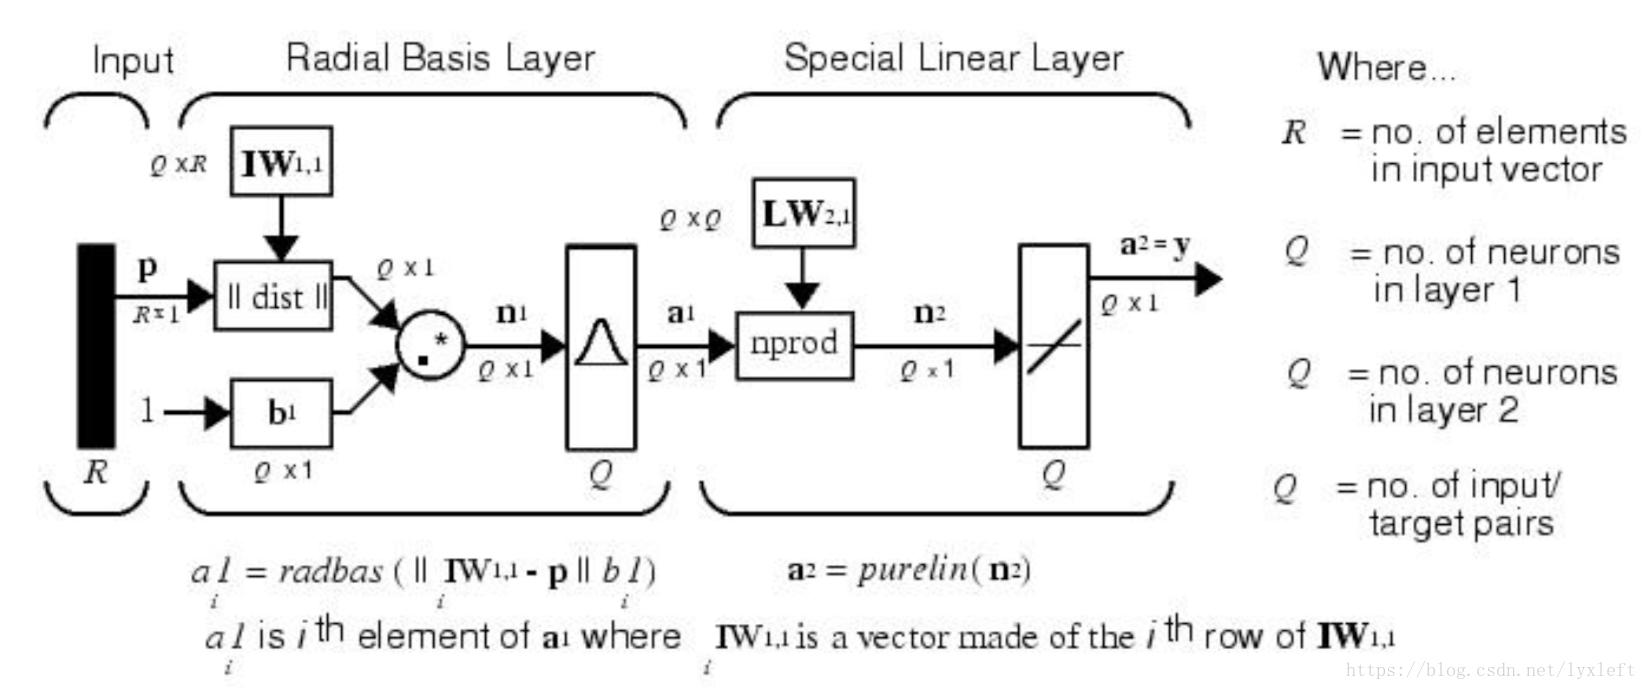 Line layering. General regression Neural Network. Radial basis function Networks. Нейросеть матлаб. Архитектура нейросети для задачи регрессии.